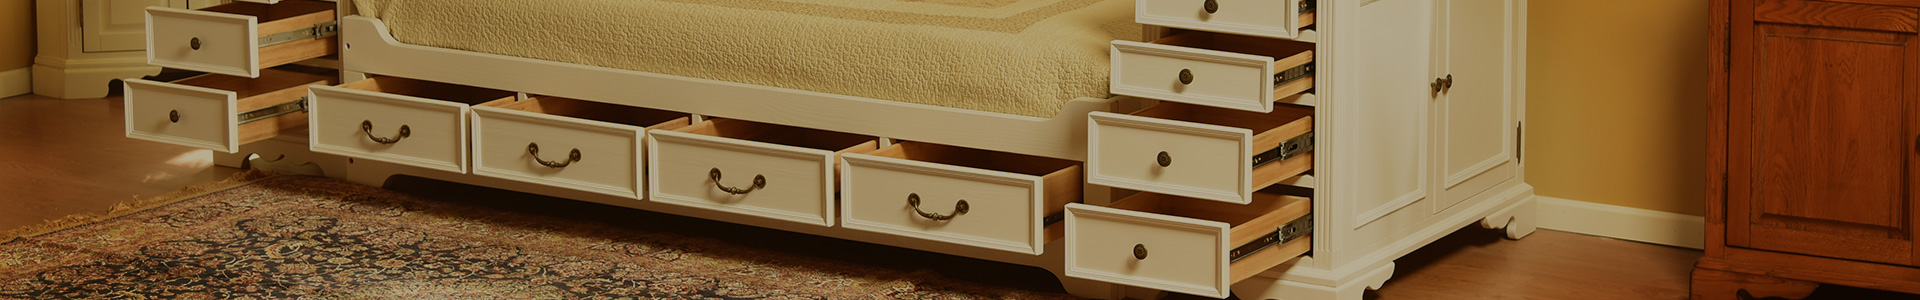 application-Hoone classical furniture handles online for dresser-Hoone-img